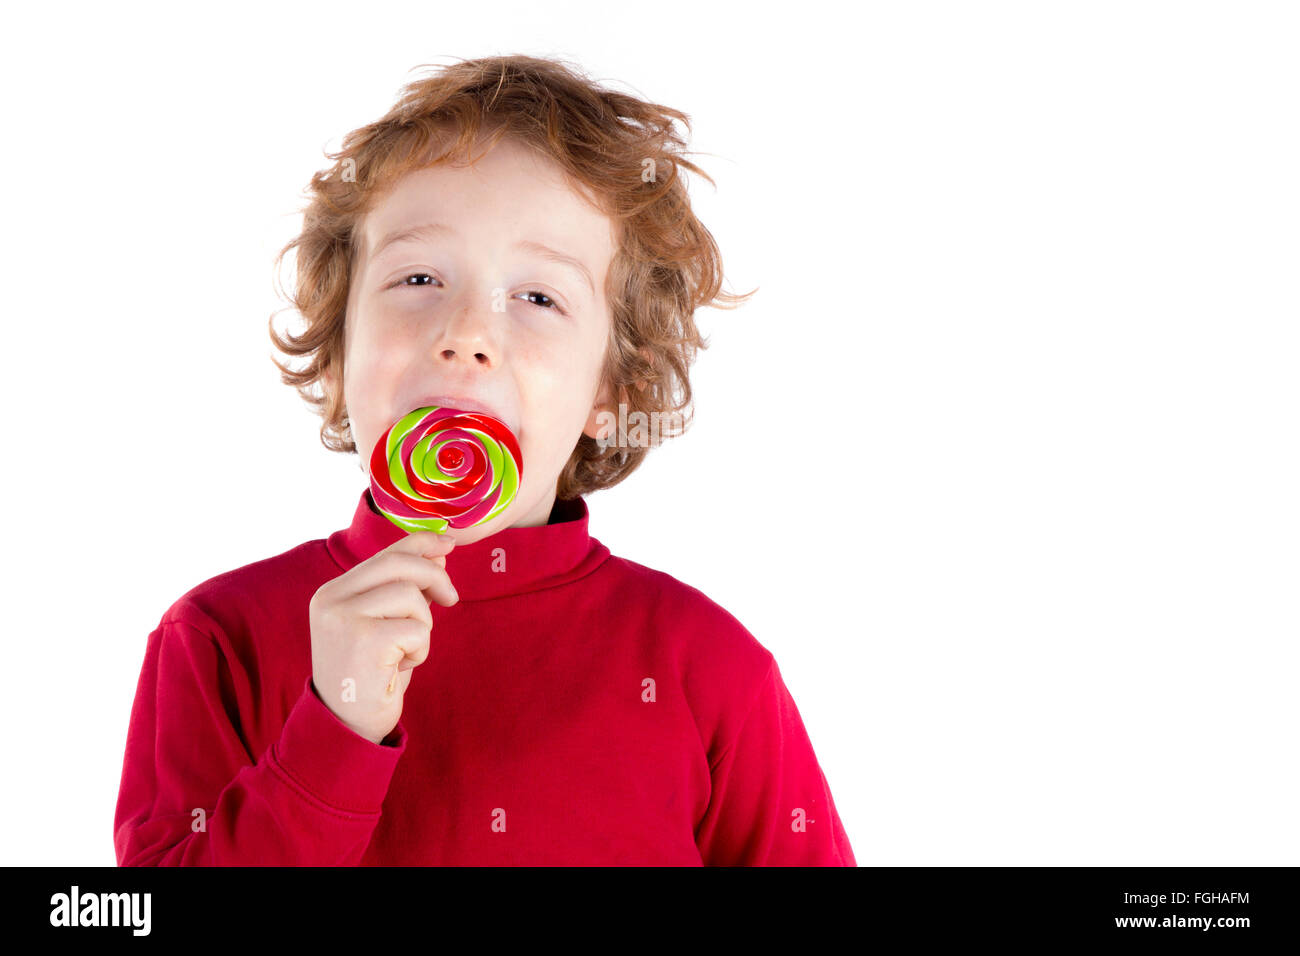 Boy licking lollipop isolated on white background Stock Photo